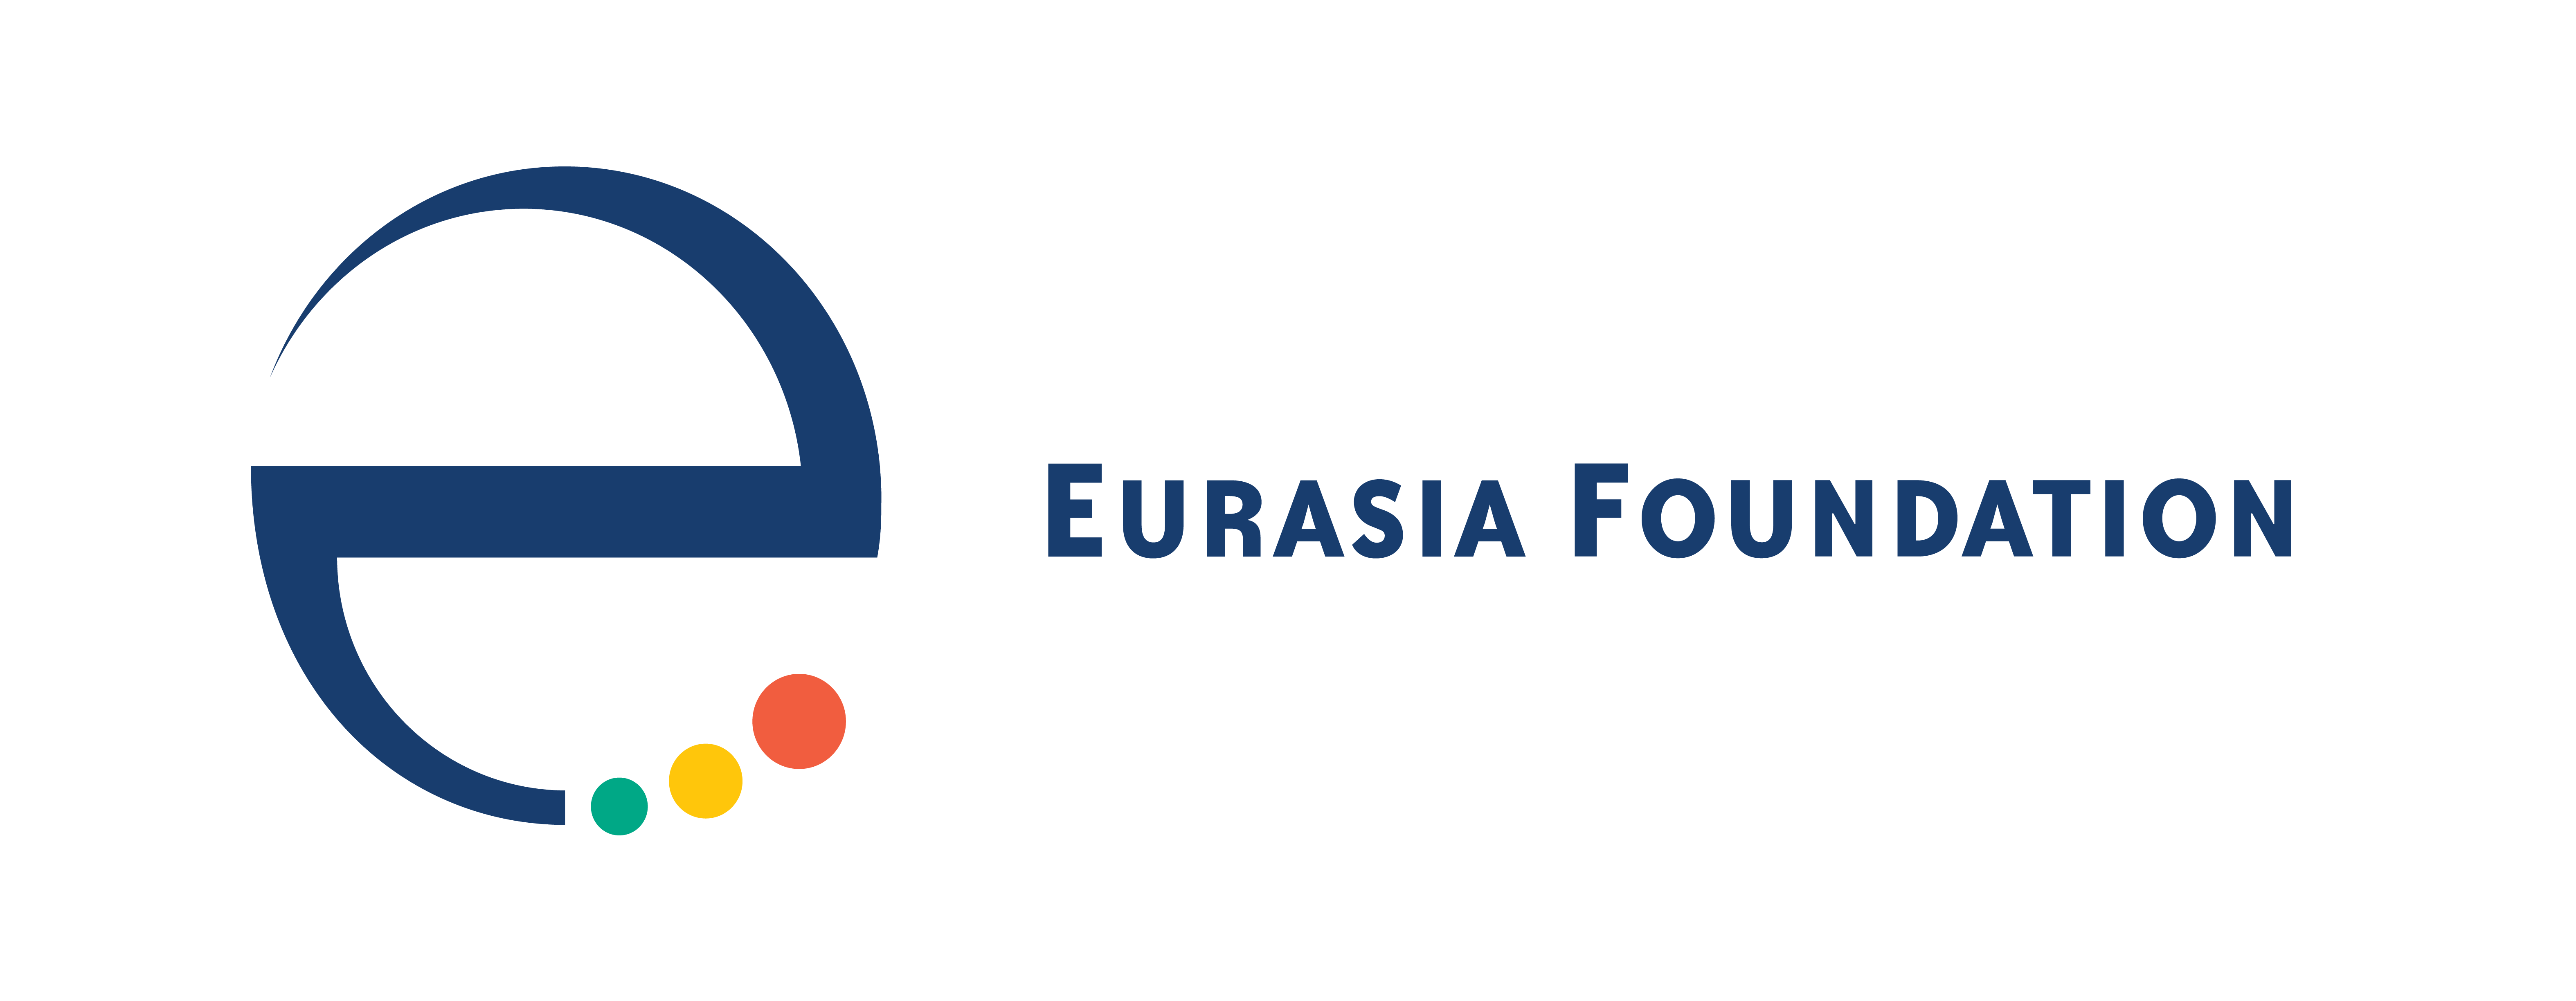 Фонд “Євразія” / Eurasia Foundation